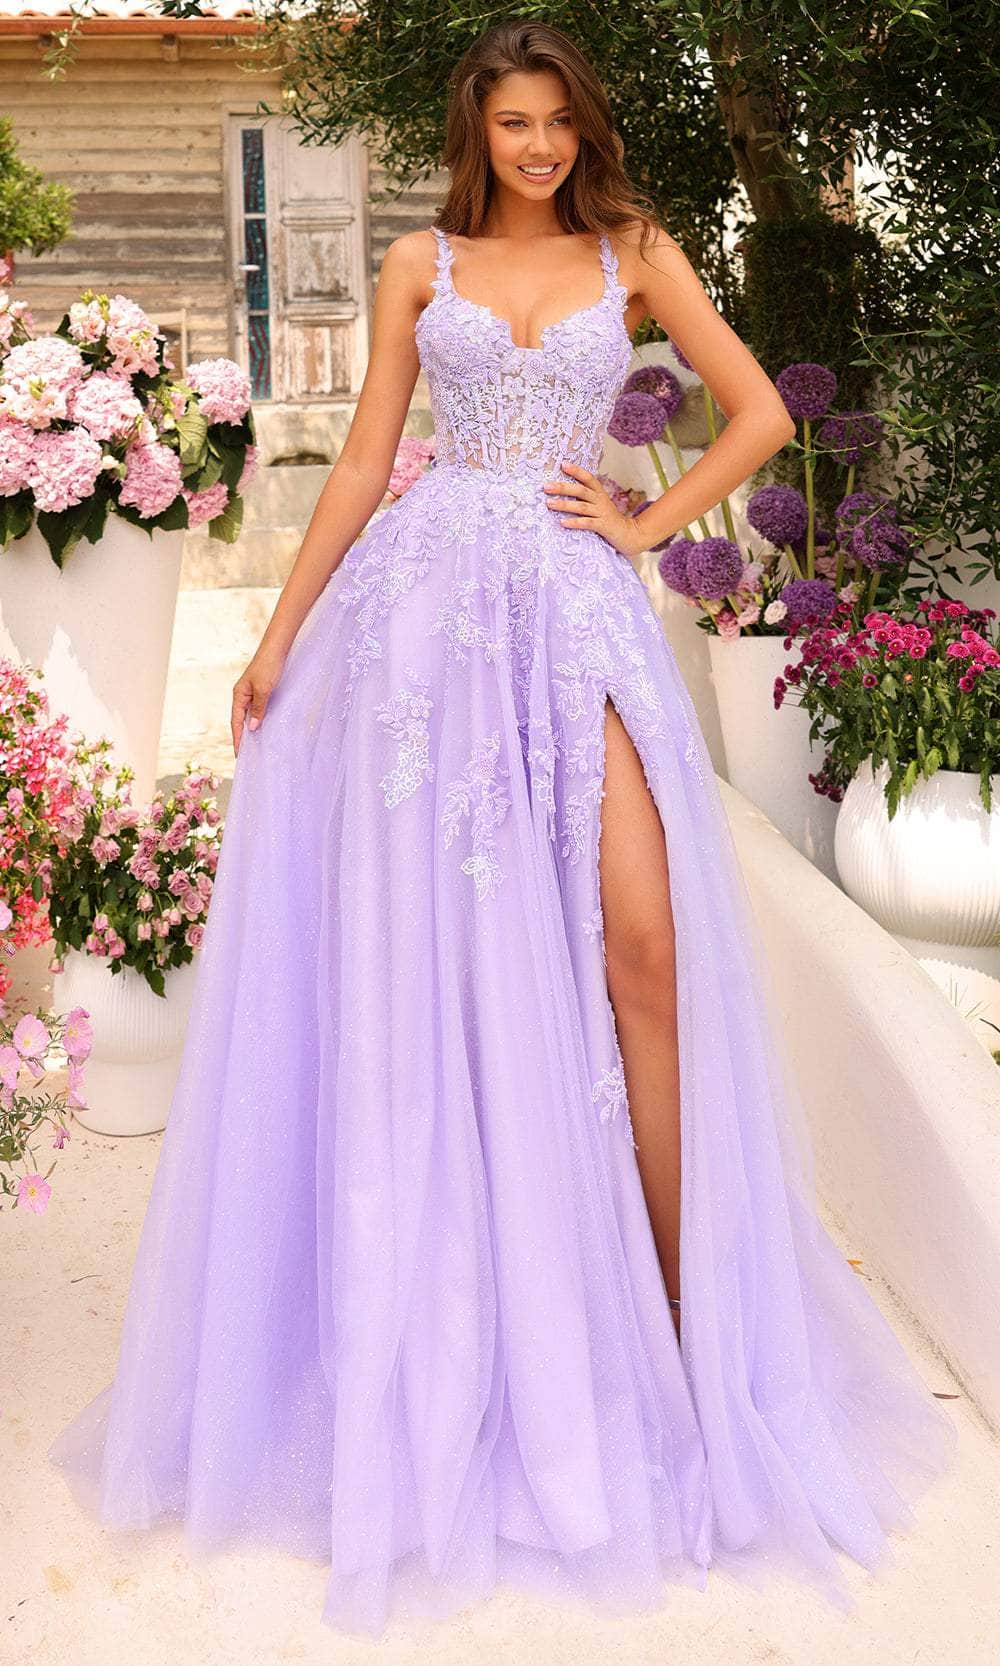 Amarra 88849 - Lace Ornate Corset Prom Dress 000 / Lilac